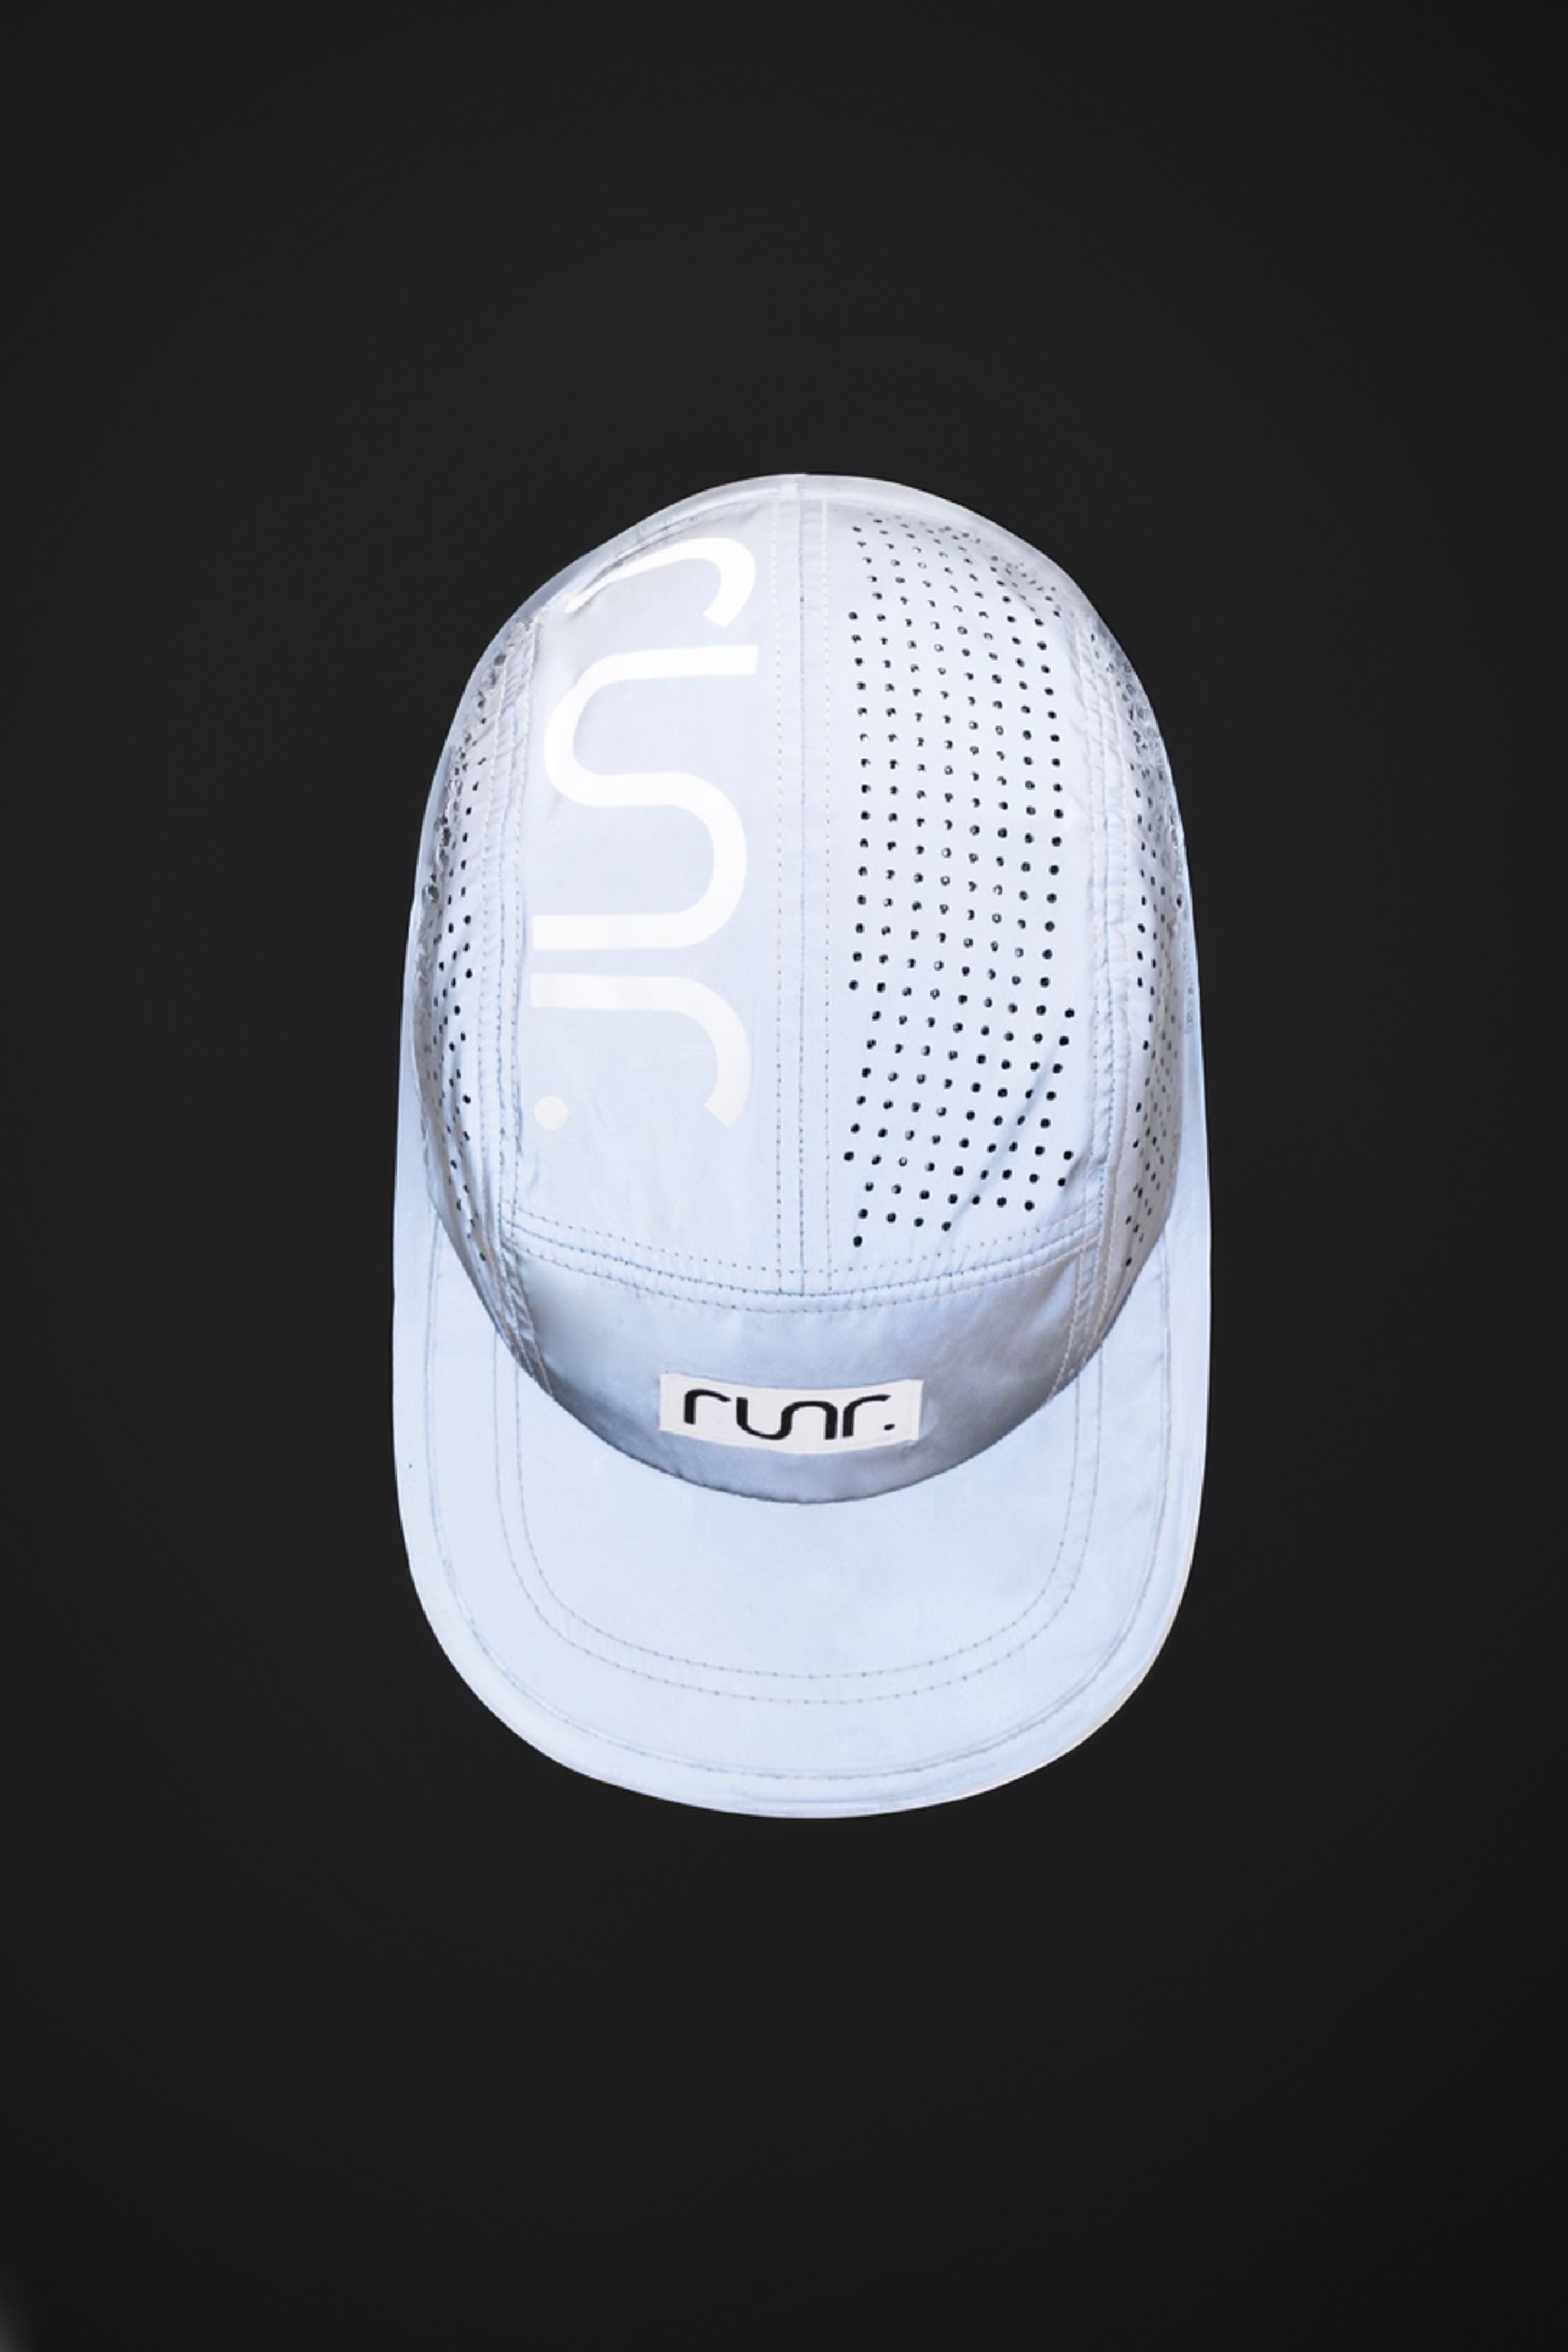 Runr Lumos Reflective Technical Running Hat